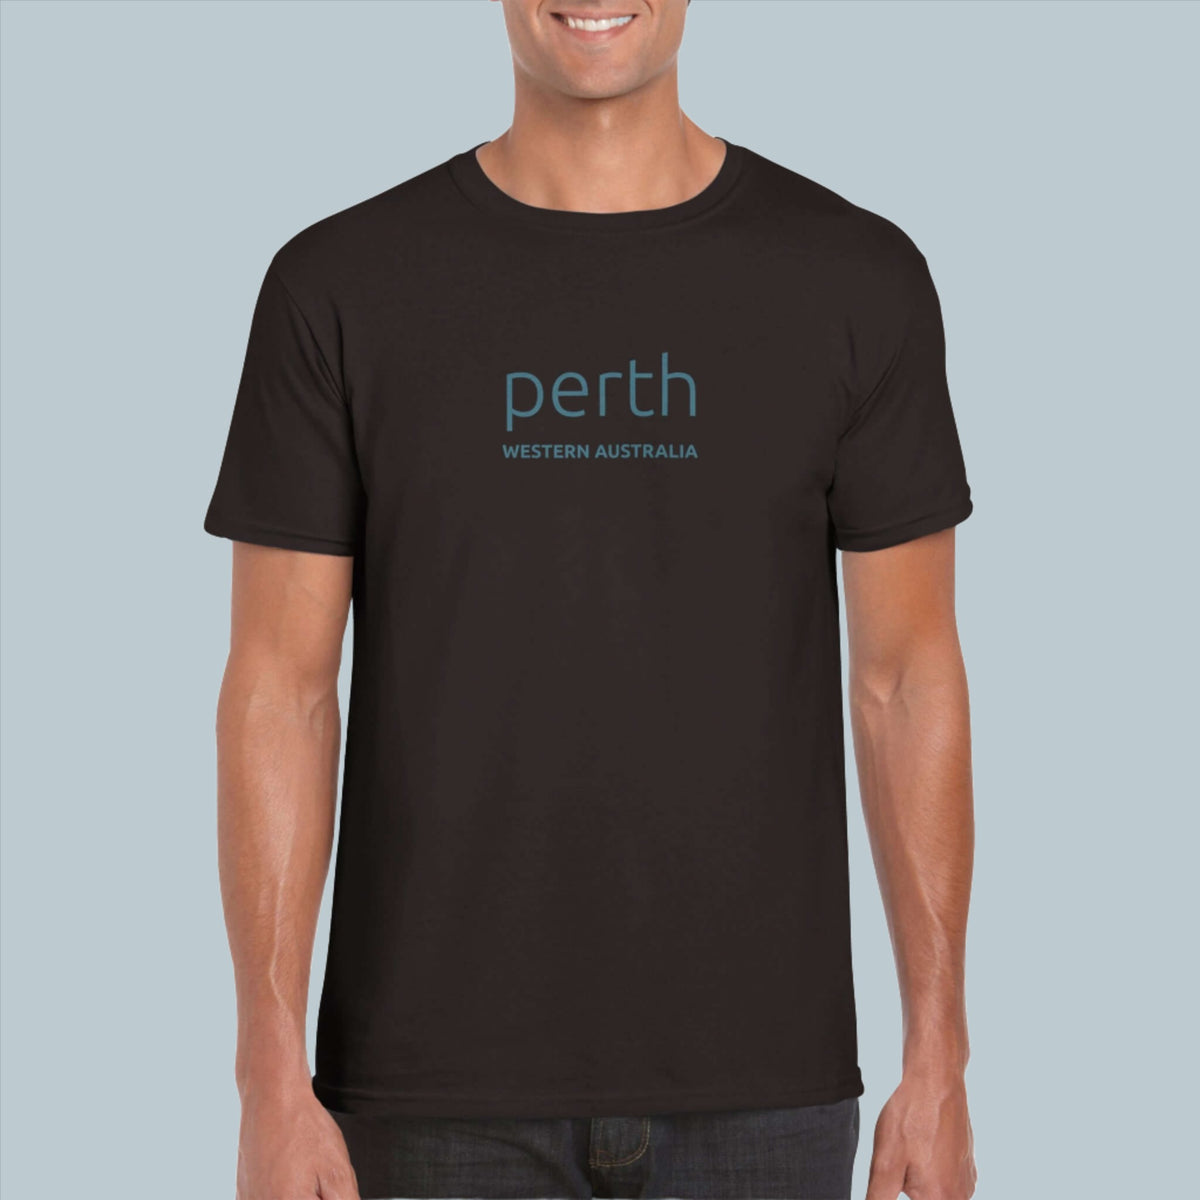 Mens Perth Western Australia chocolate brown t shirt - MangoBap